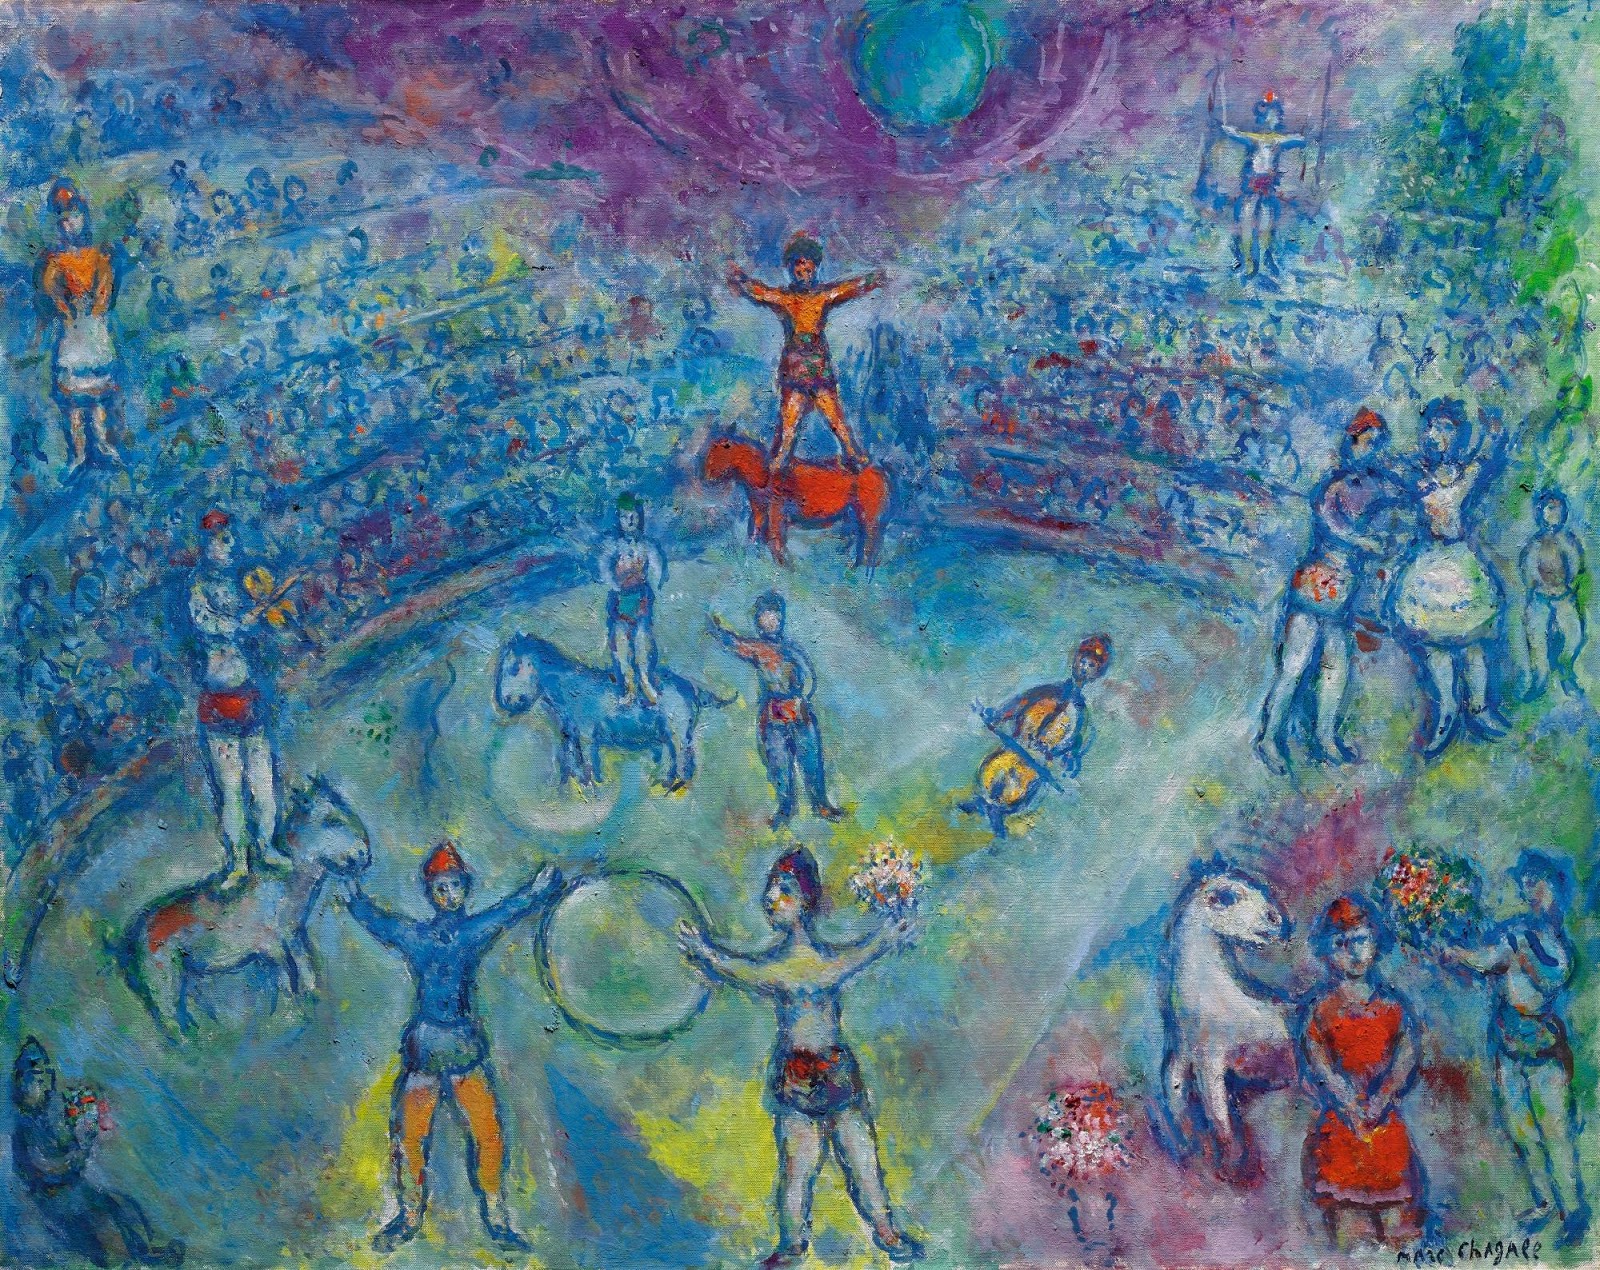 Marc+Chagall-1887-1985 (56).jpg